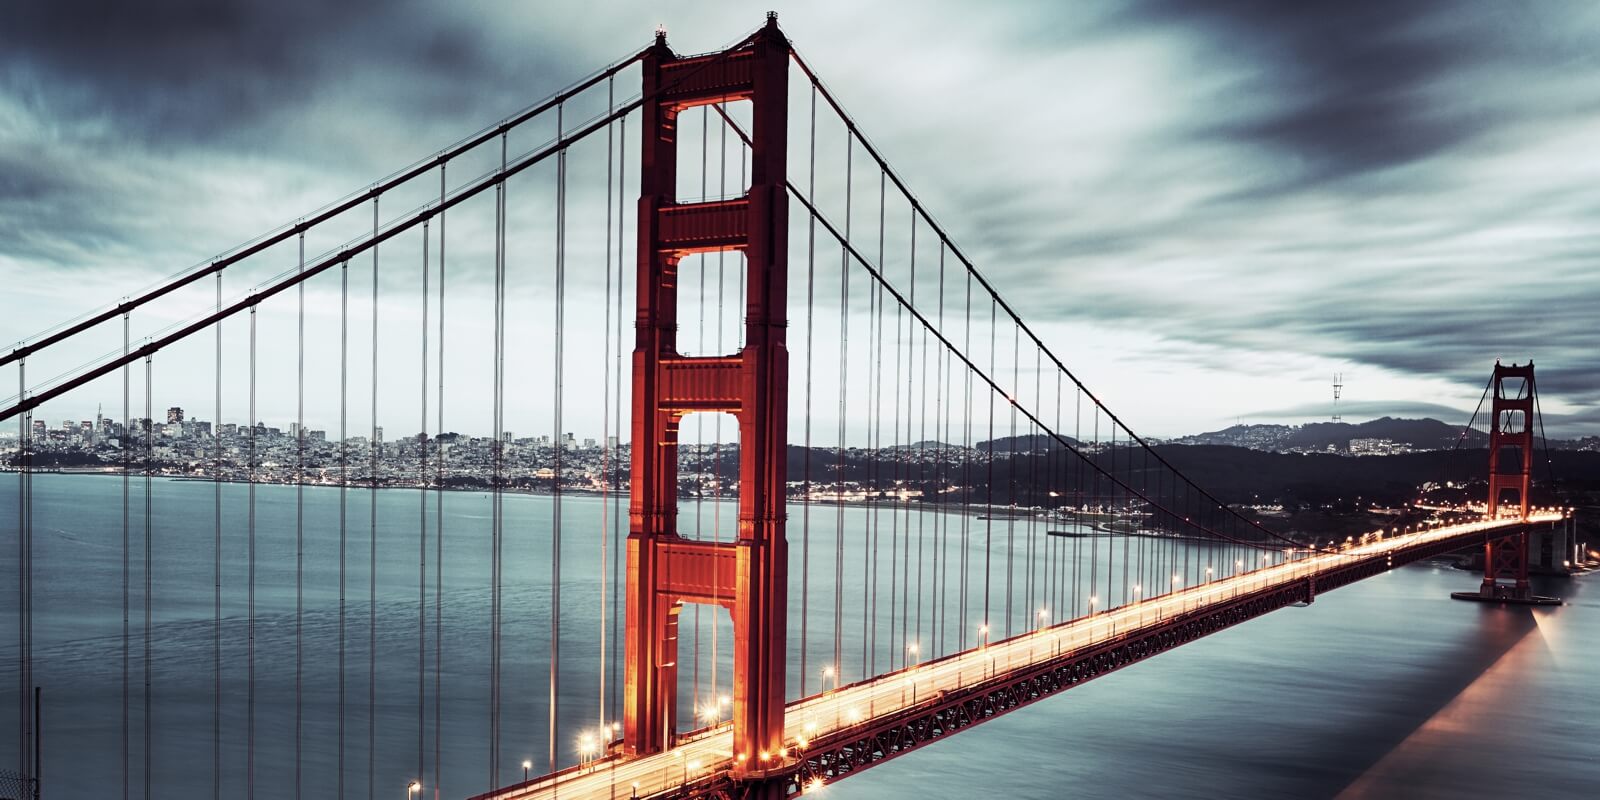 Vlies Tapete XXL Poster Fototapete USA Golden Gate Bridge